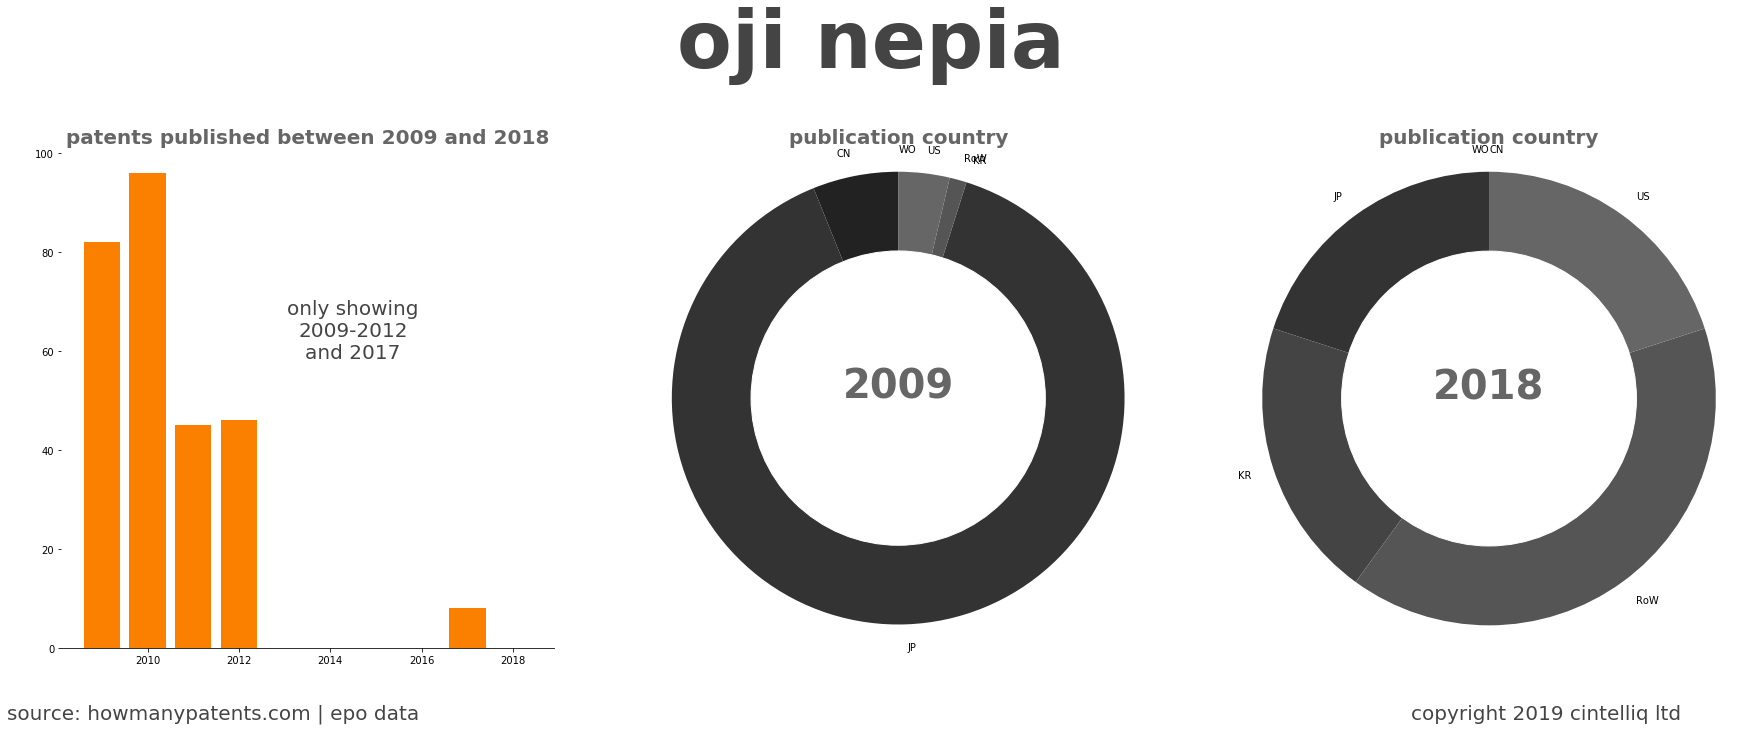 summary of patents for Oji Nepia